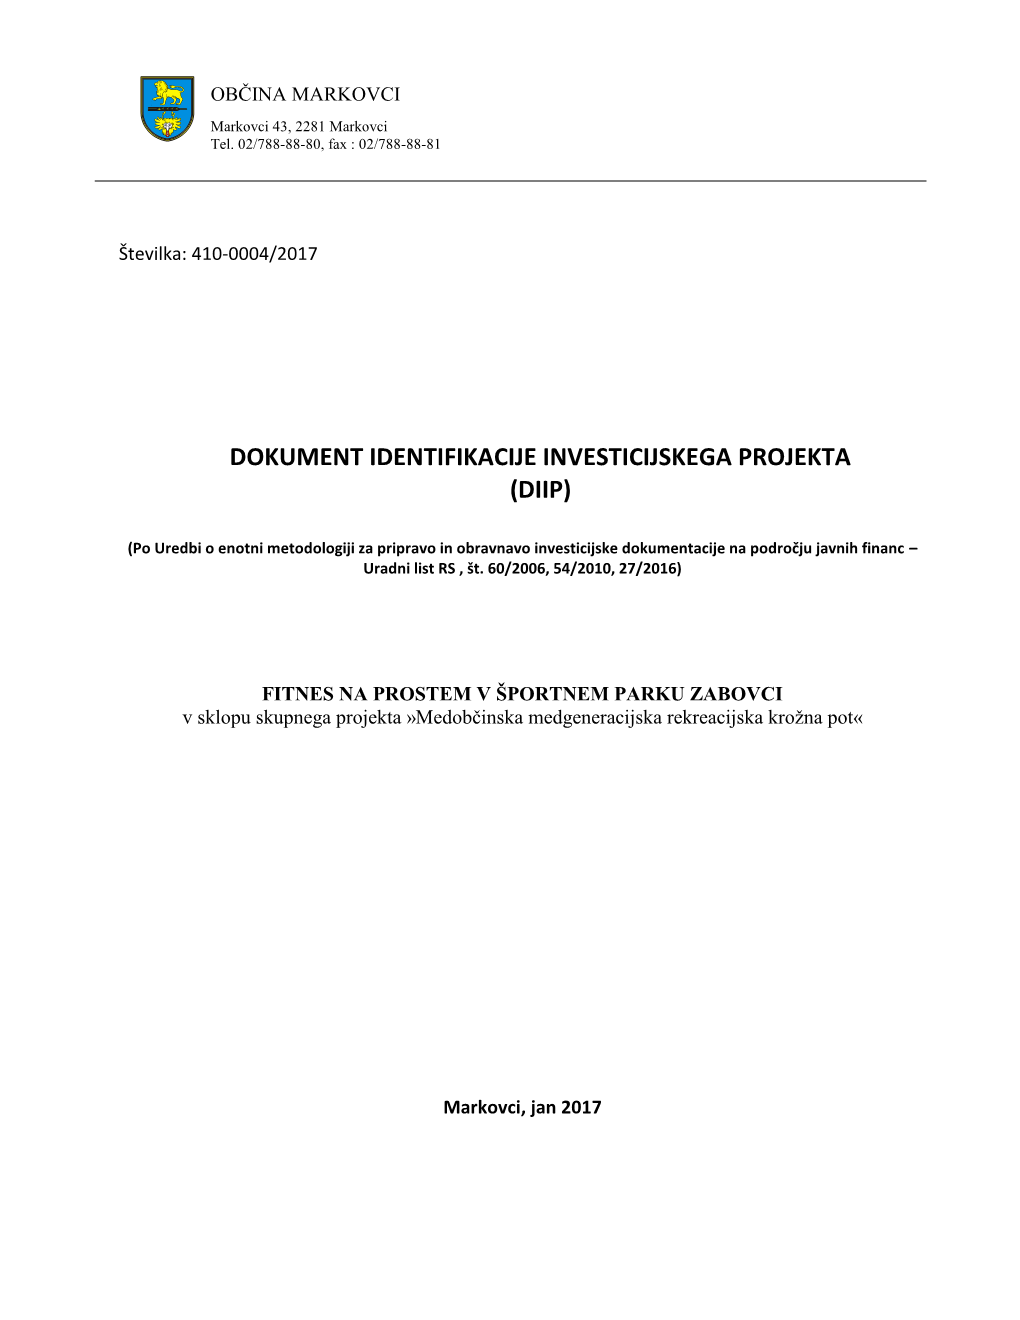 Dokument Identifikacije Investicijskega Projekta (Diip)